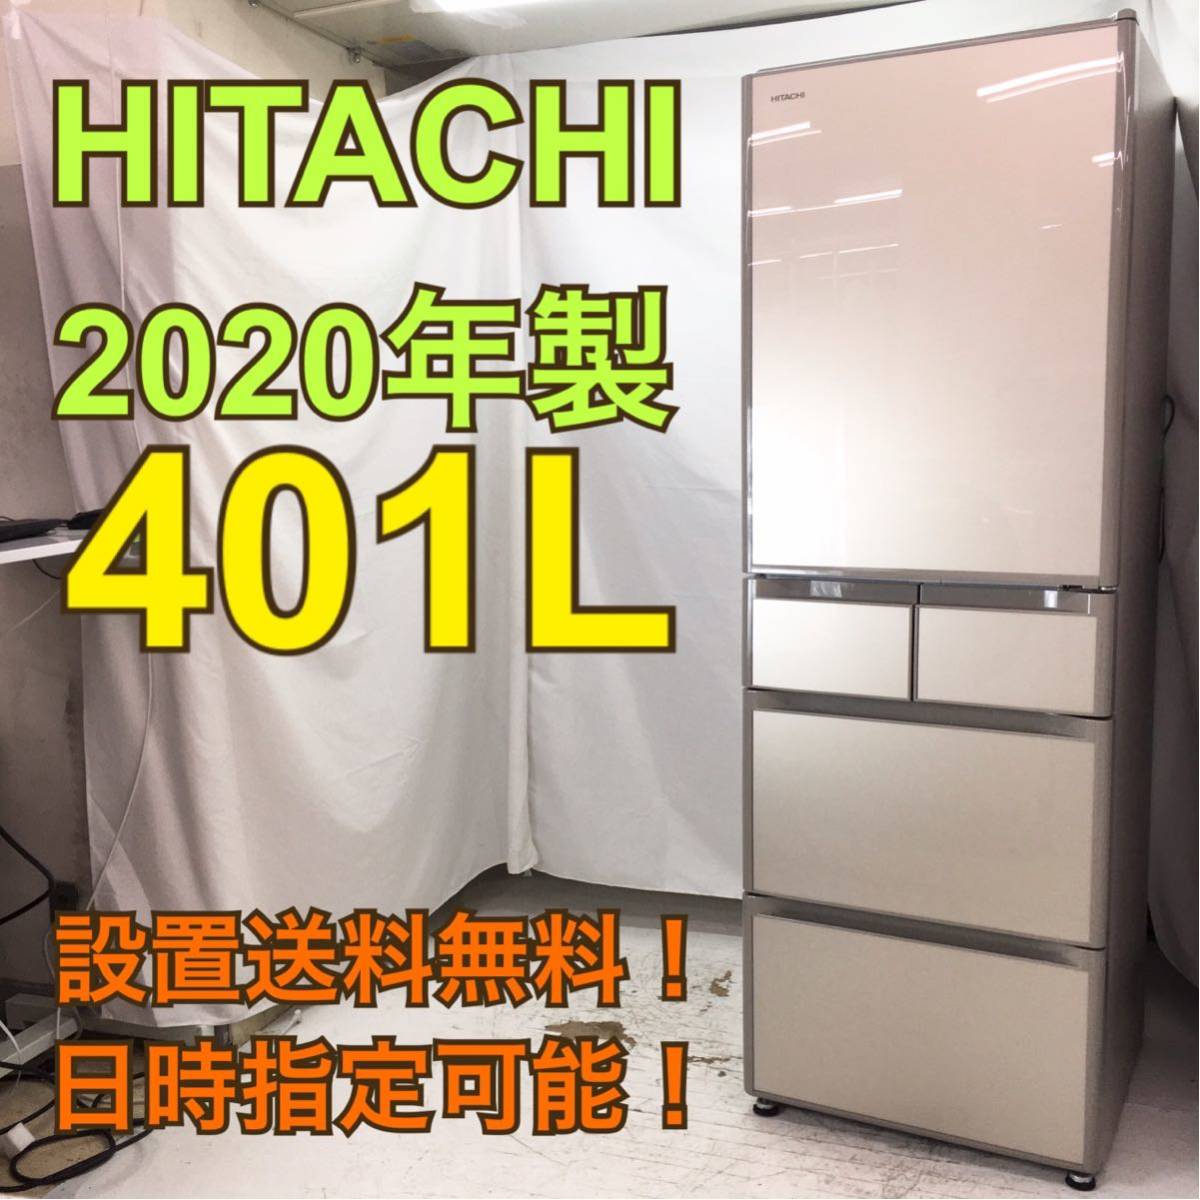 HITACHI 401Lガラストップ冷蔵庫 RS40K(XN) 2020年製 入荷しました☆ ｜ 不用品買取を依頼するならコスト